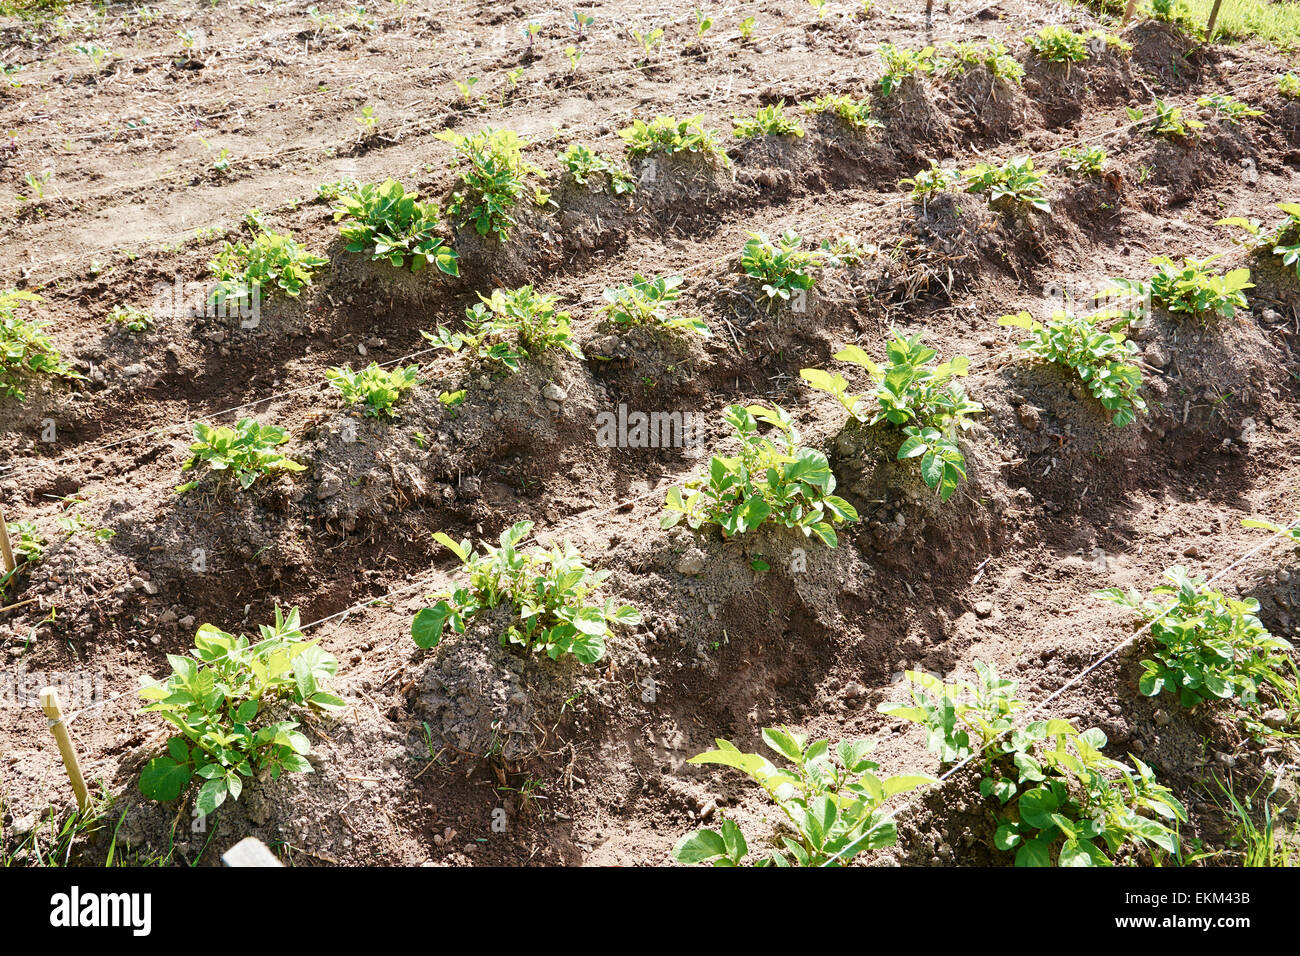 Rows of potatoes in a vegetable garden. Stock Photo